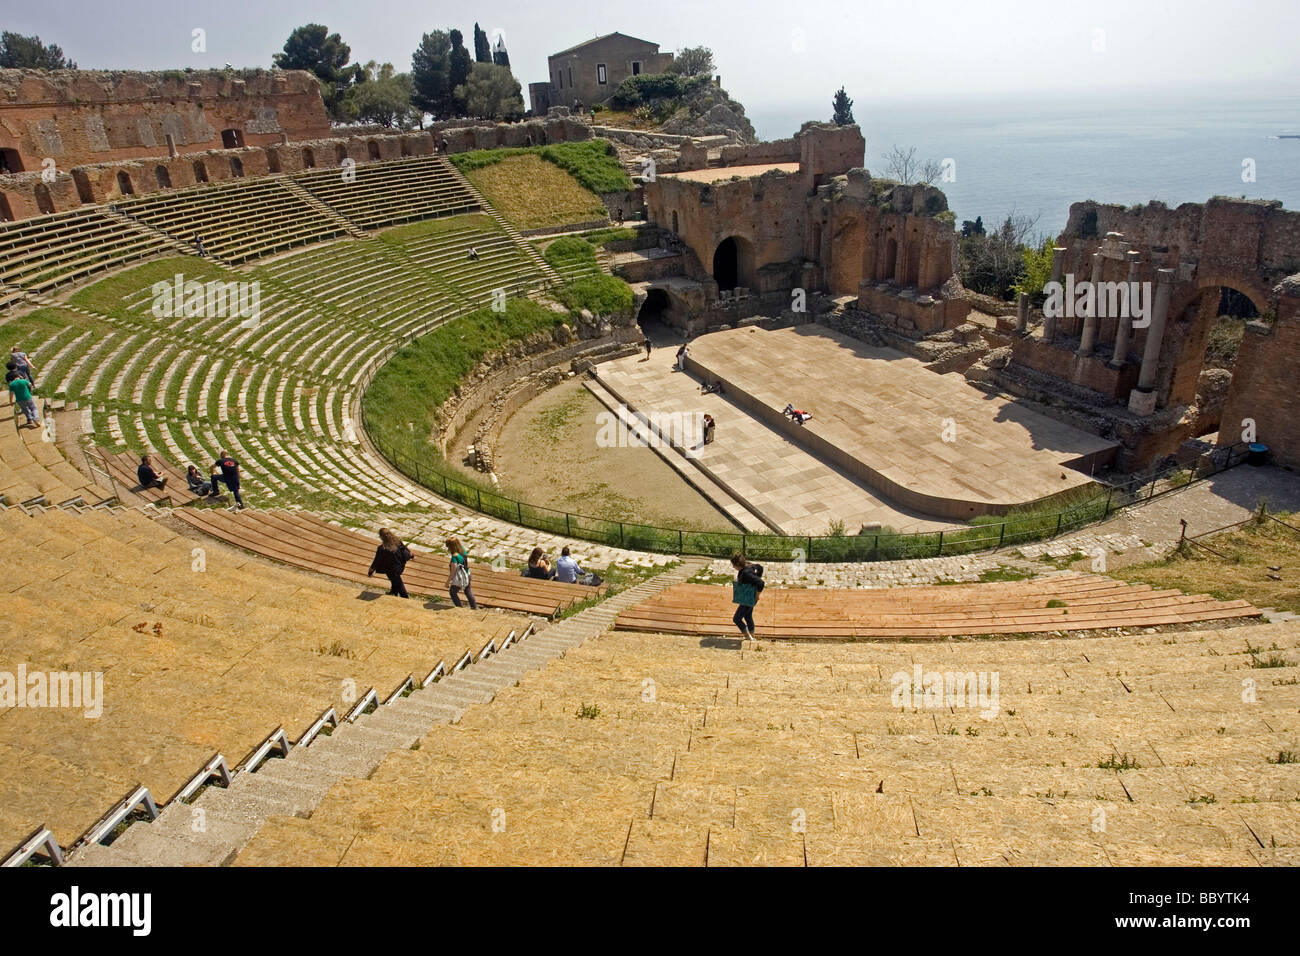 Greek theatre, Teatro Greco, 3rd century B.C. amphitheatre, Taormina, Sicily, Italy Stock Photo